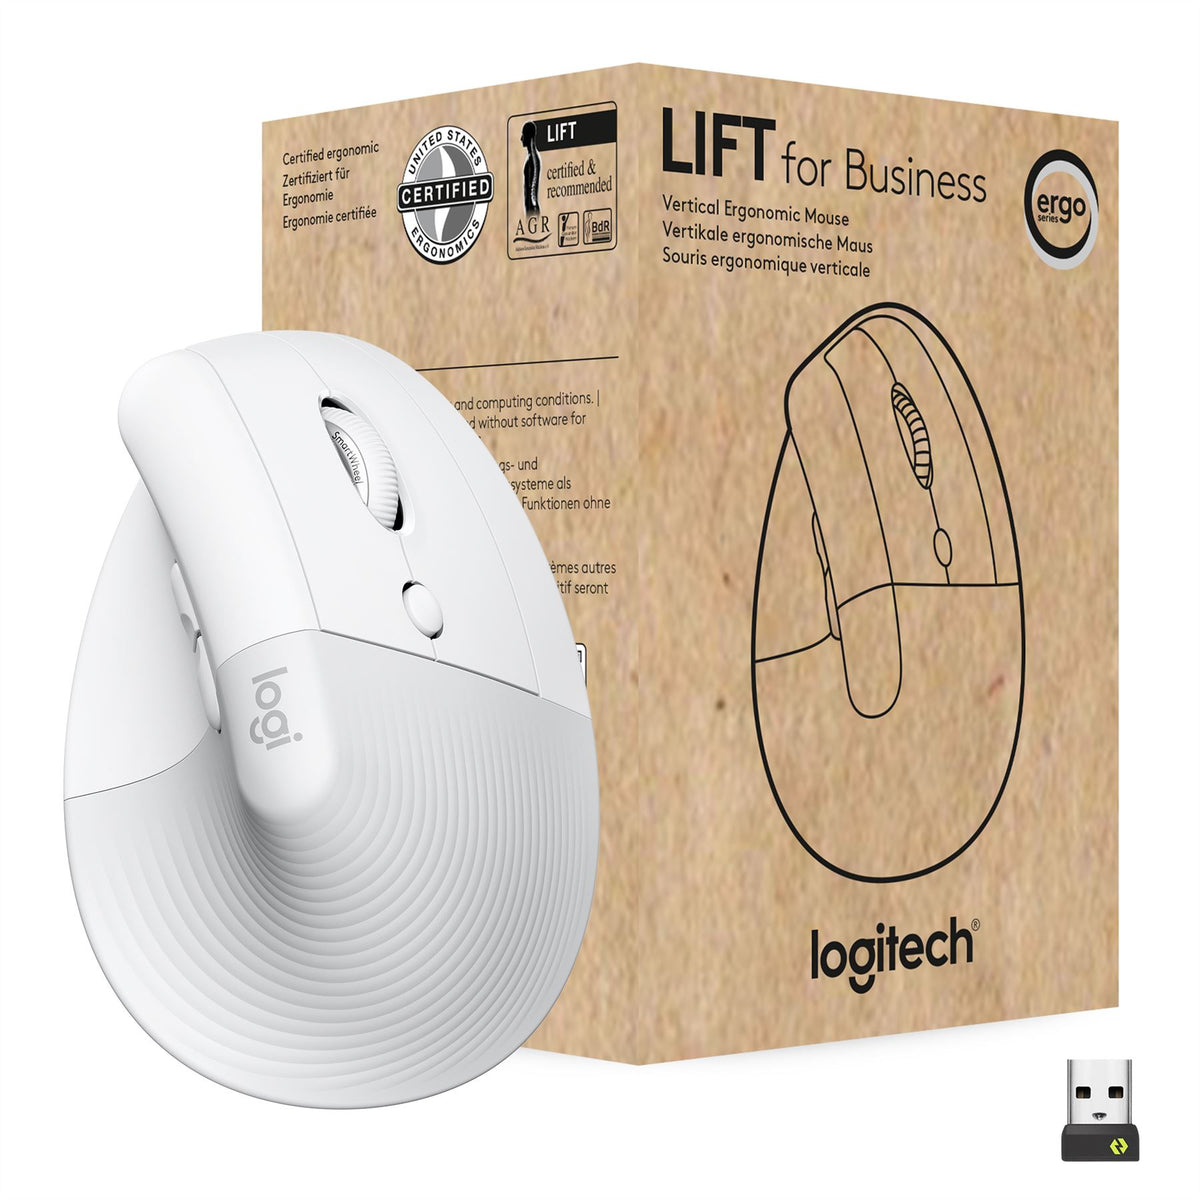 Logitech Lift Vertical Ergonomic Mouse for Business in White